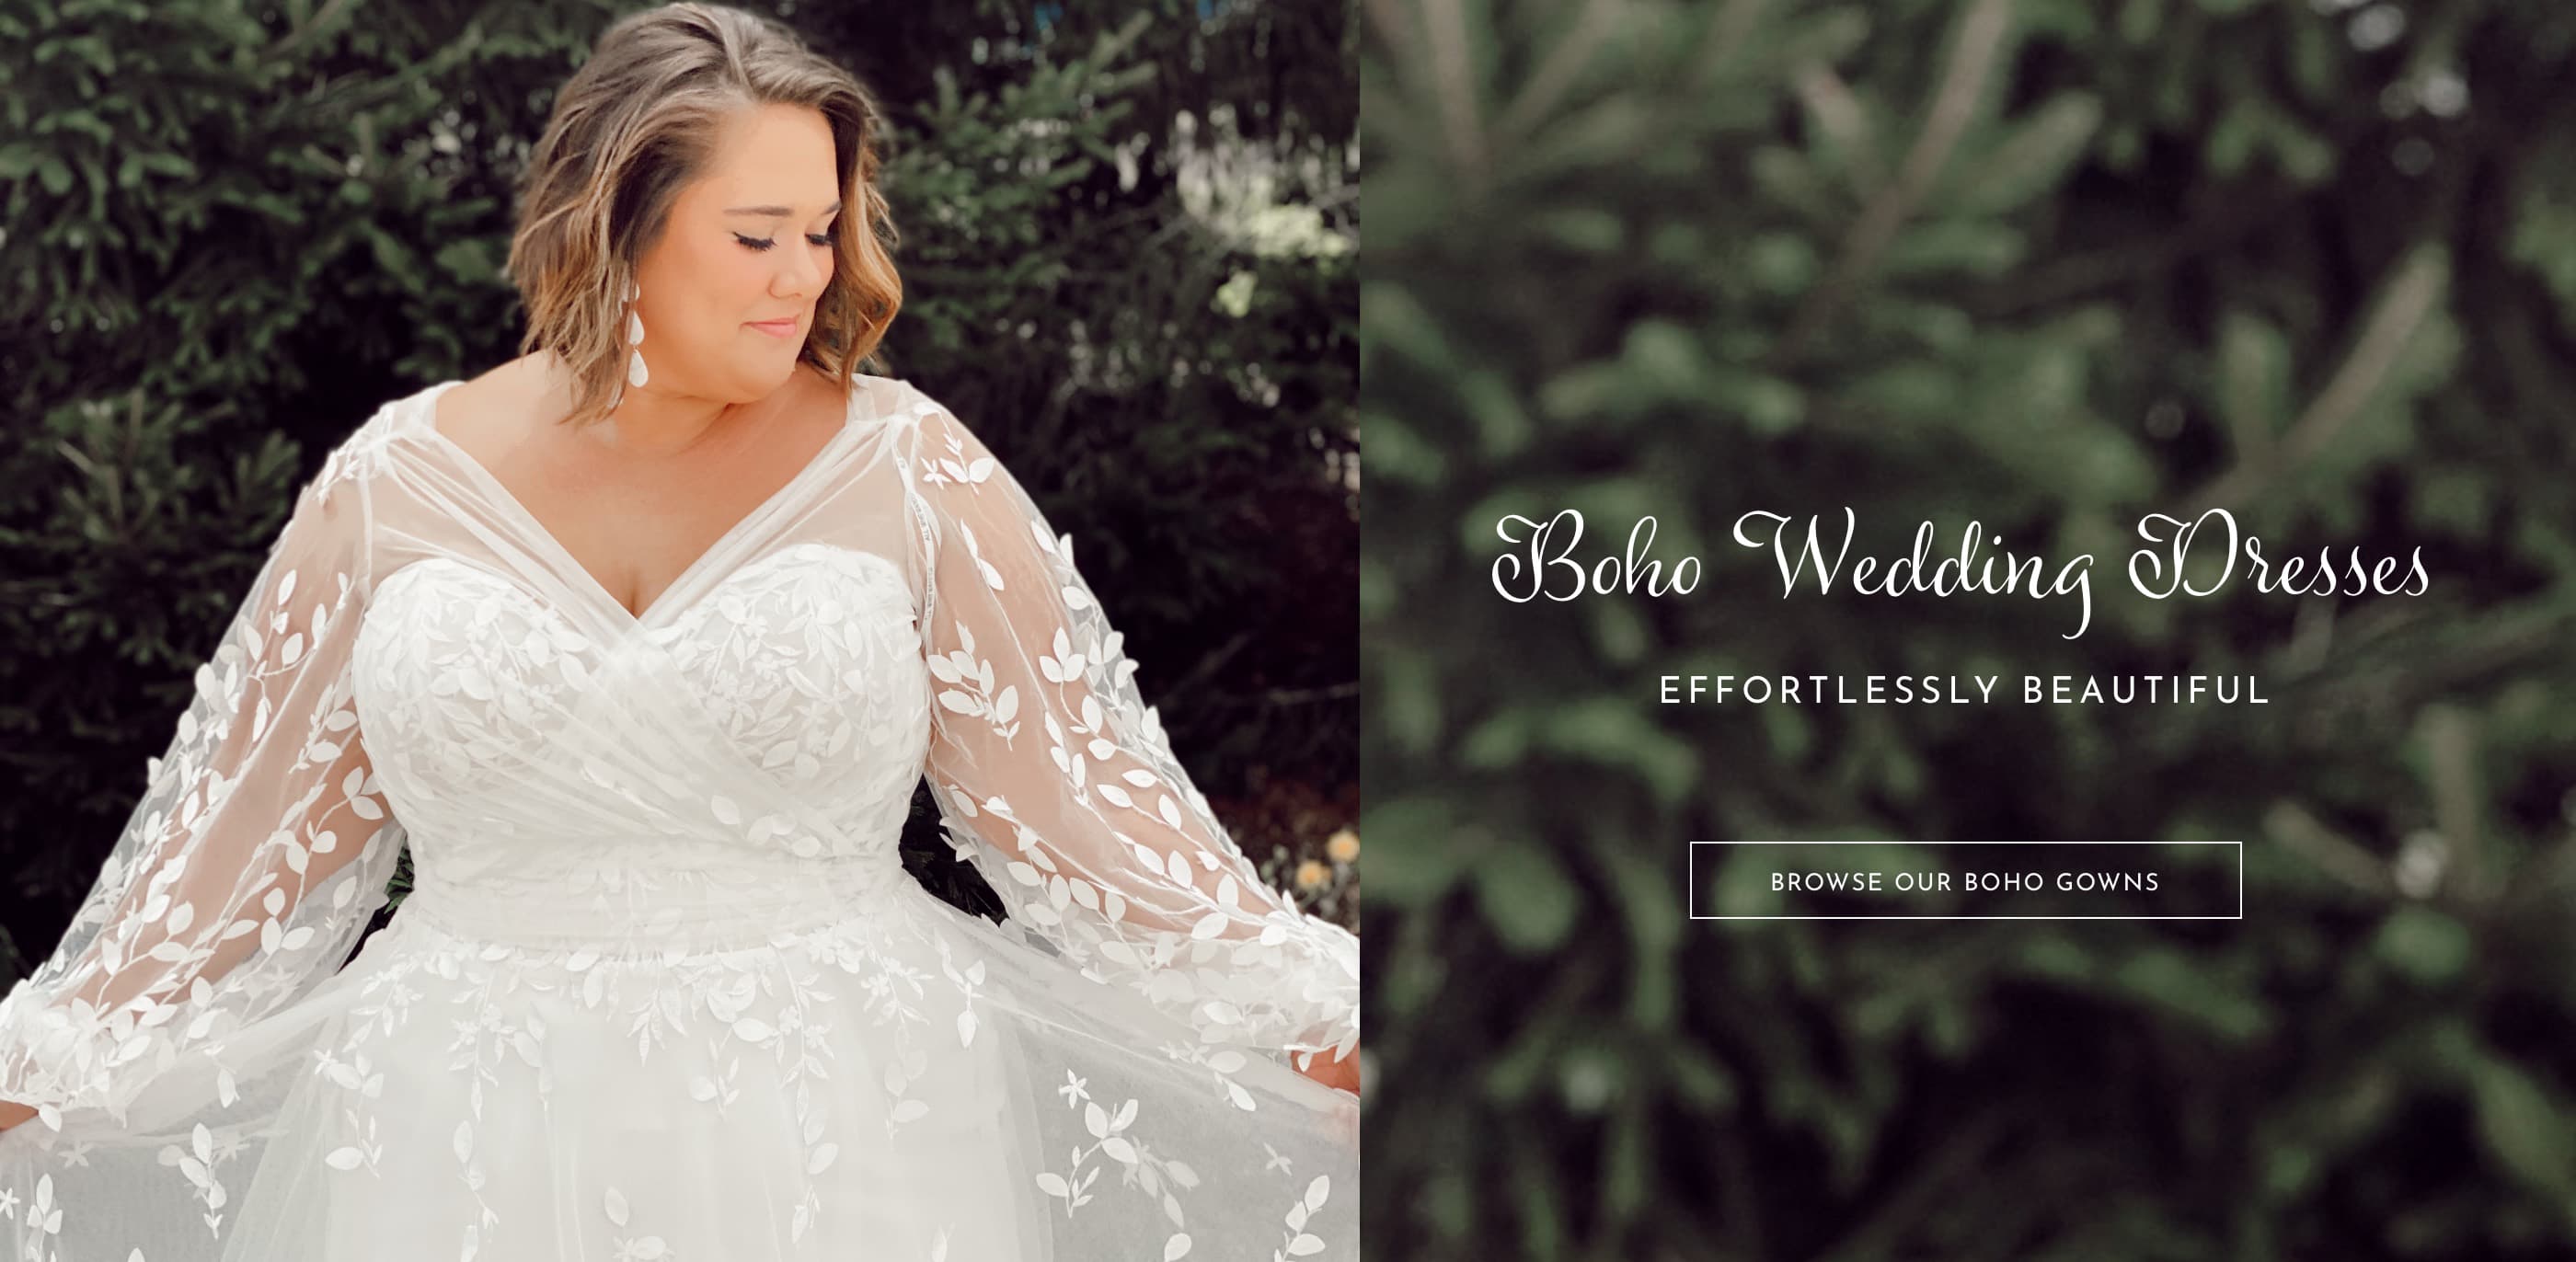 Boho Wedding Dresses. Desktop Image.